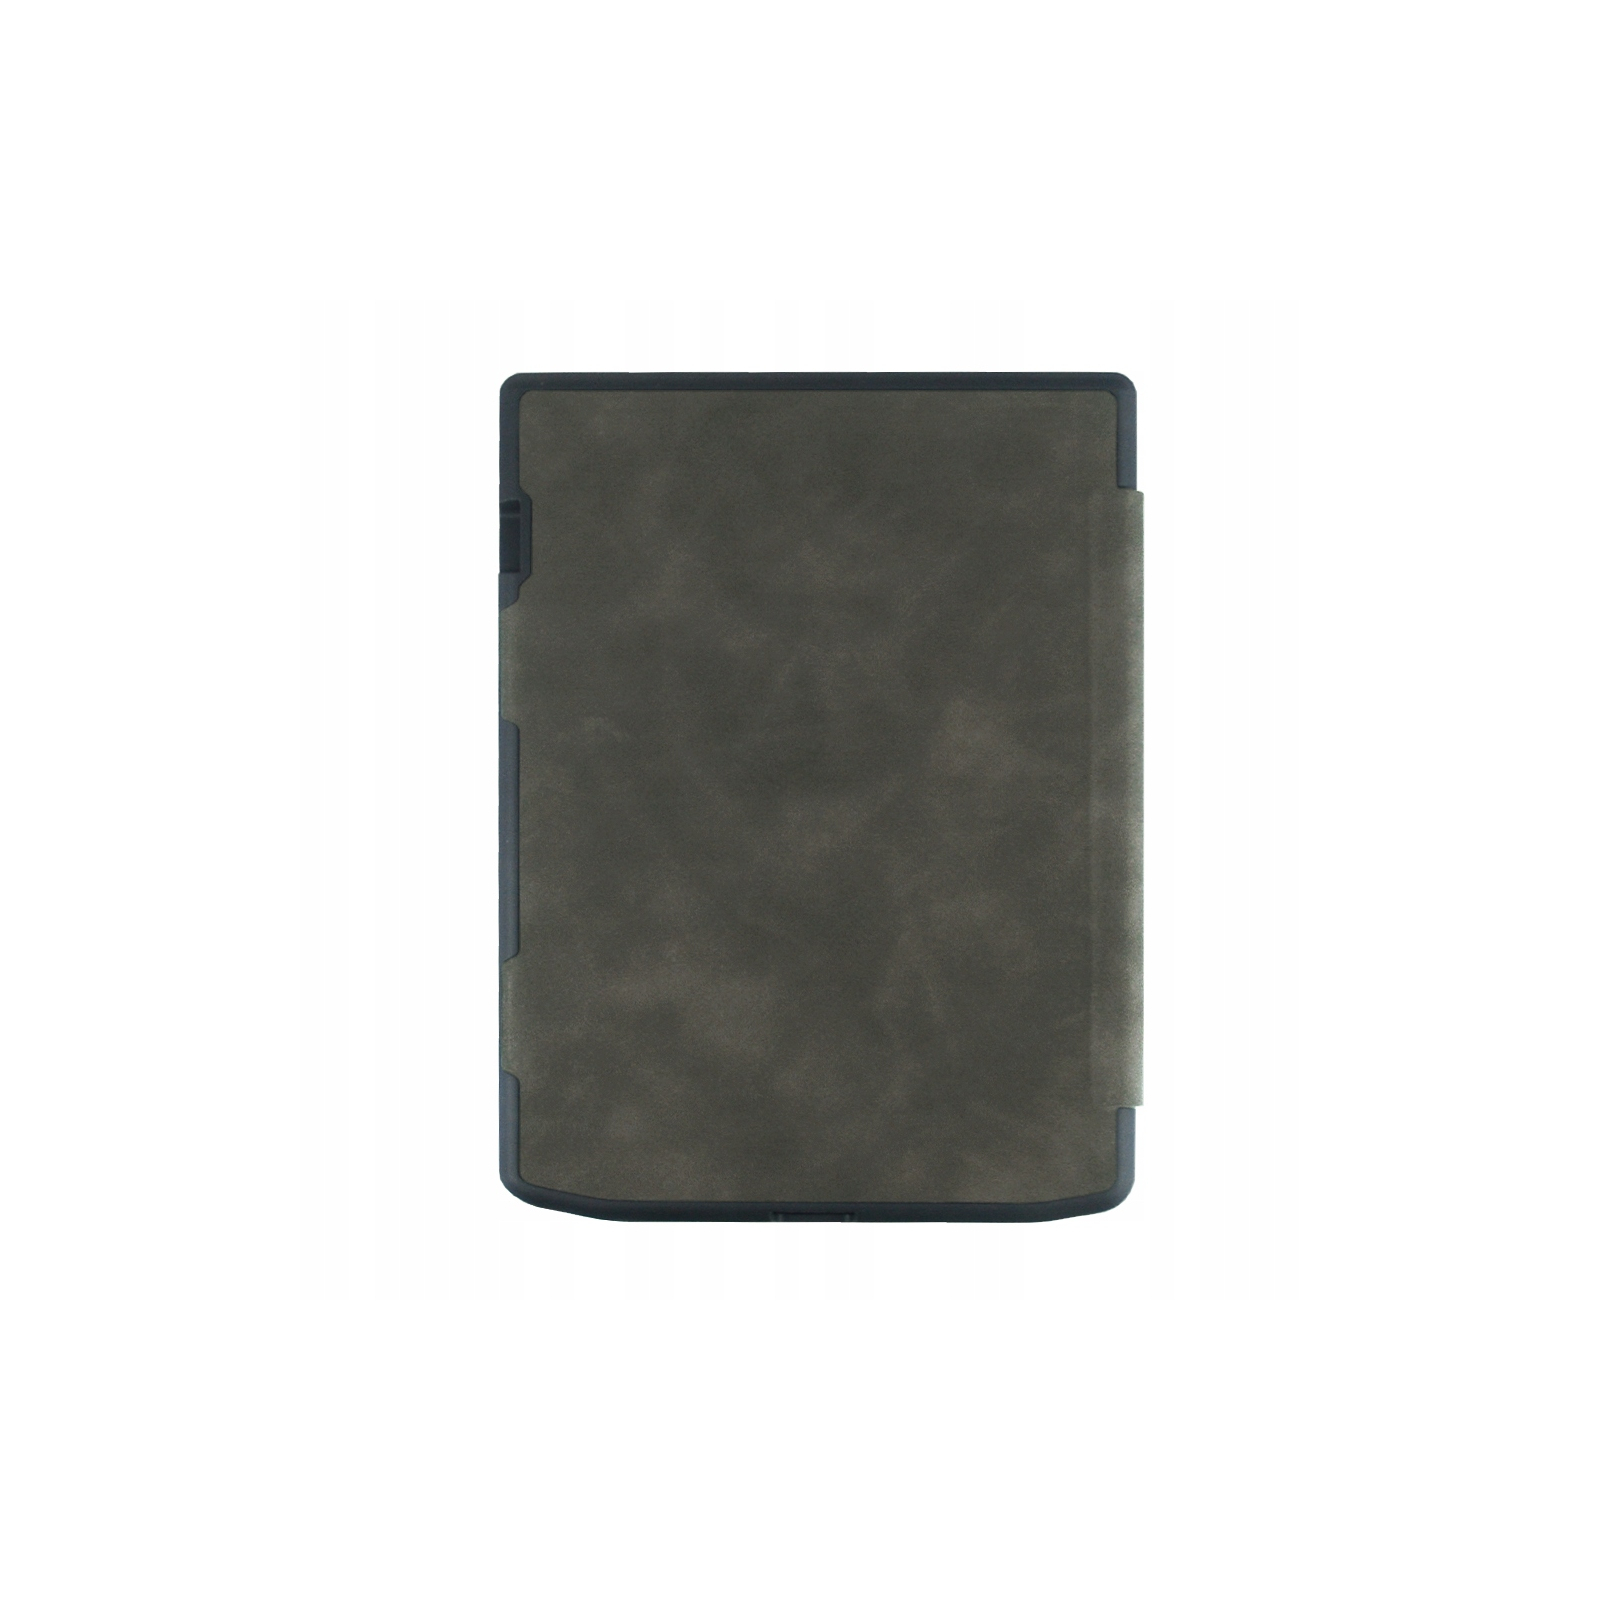 Чехол для электронной книги BeCover PocketBook 743G InkPad 4/InkPad Color 2/InkPad Color 3 (7.8") Black (710066) изображение 4